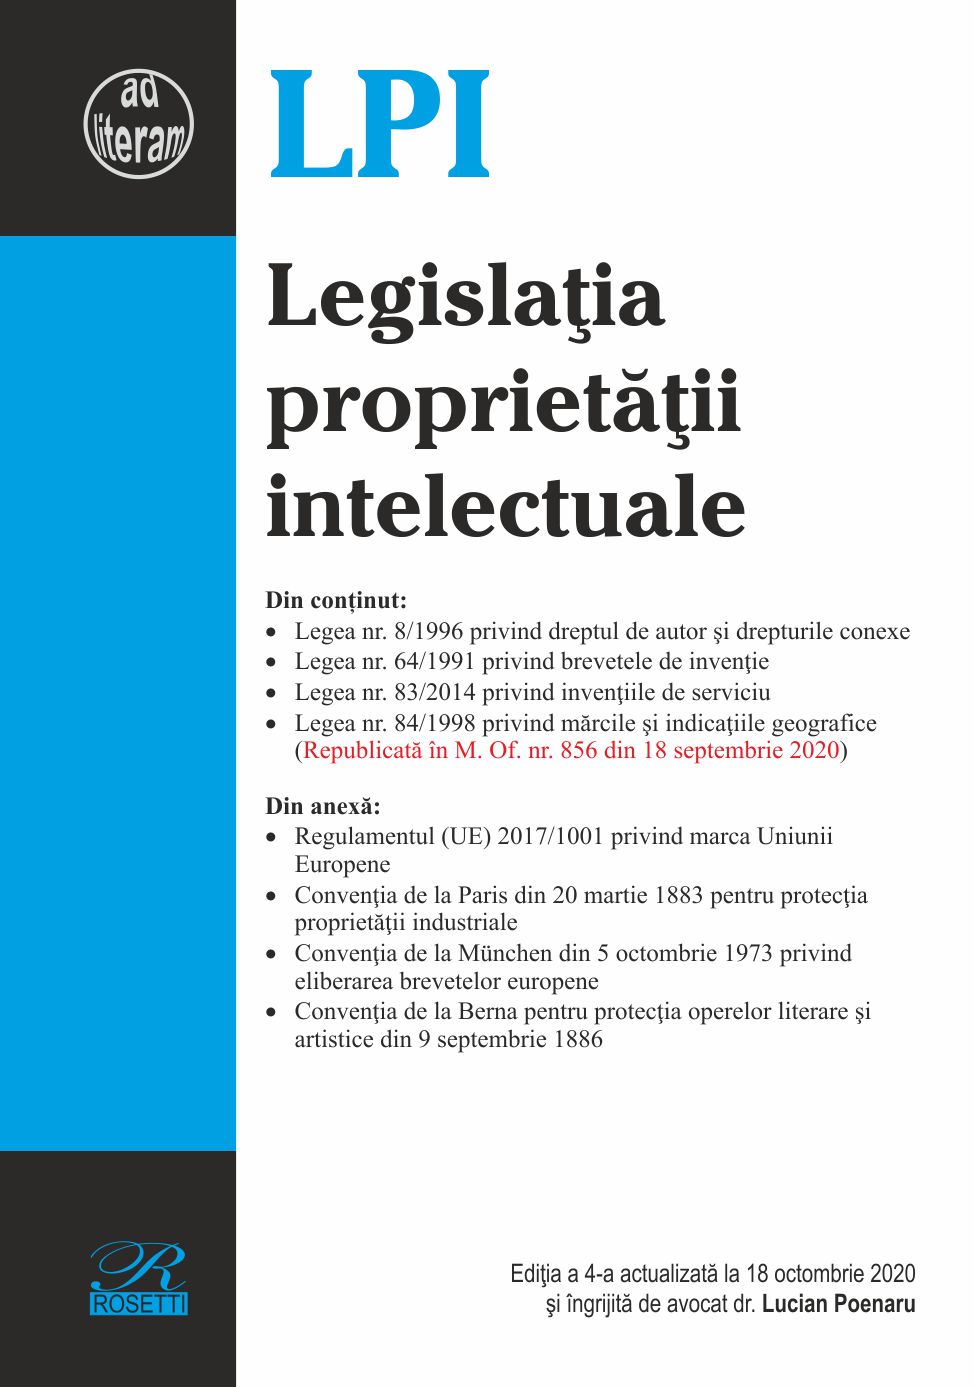 Legislatia proprietatii intelectuale. Editia a 4-a actualizata la 18 octombrie 2020 | Lucian Poenaru carturesti.ro poza bestsellers.ro